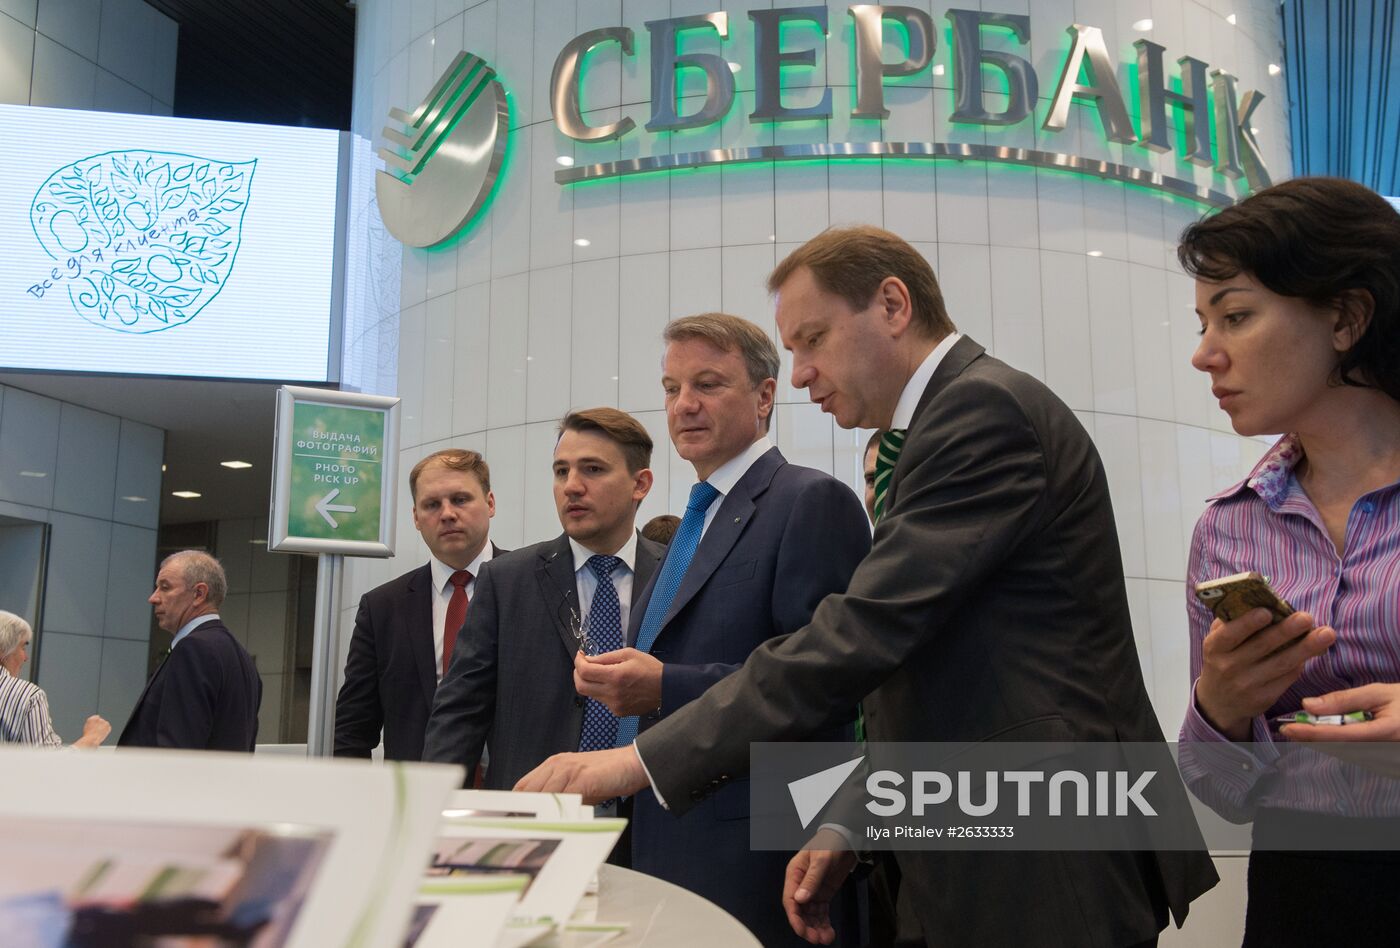 Annual General Meeting of Sberbank shareholders